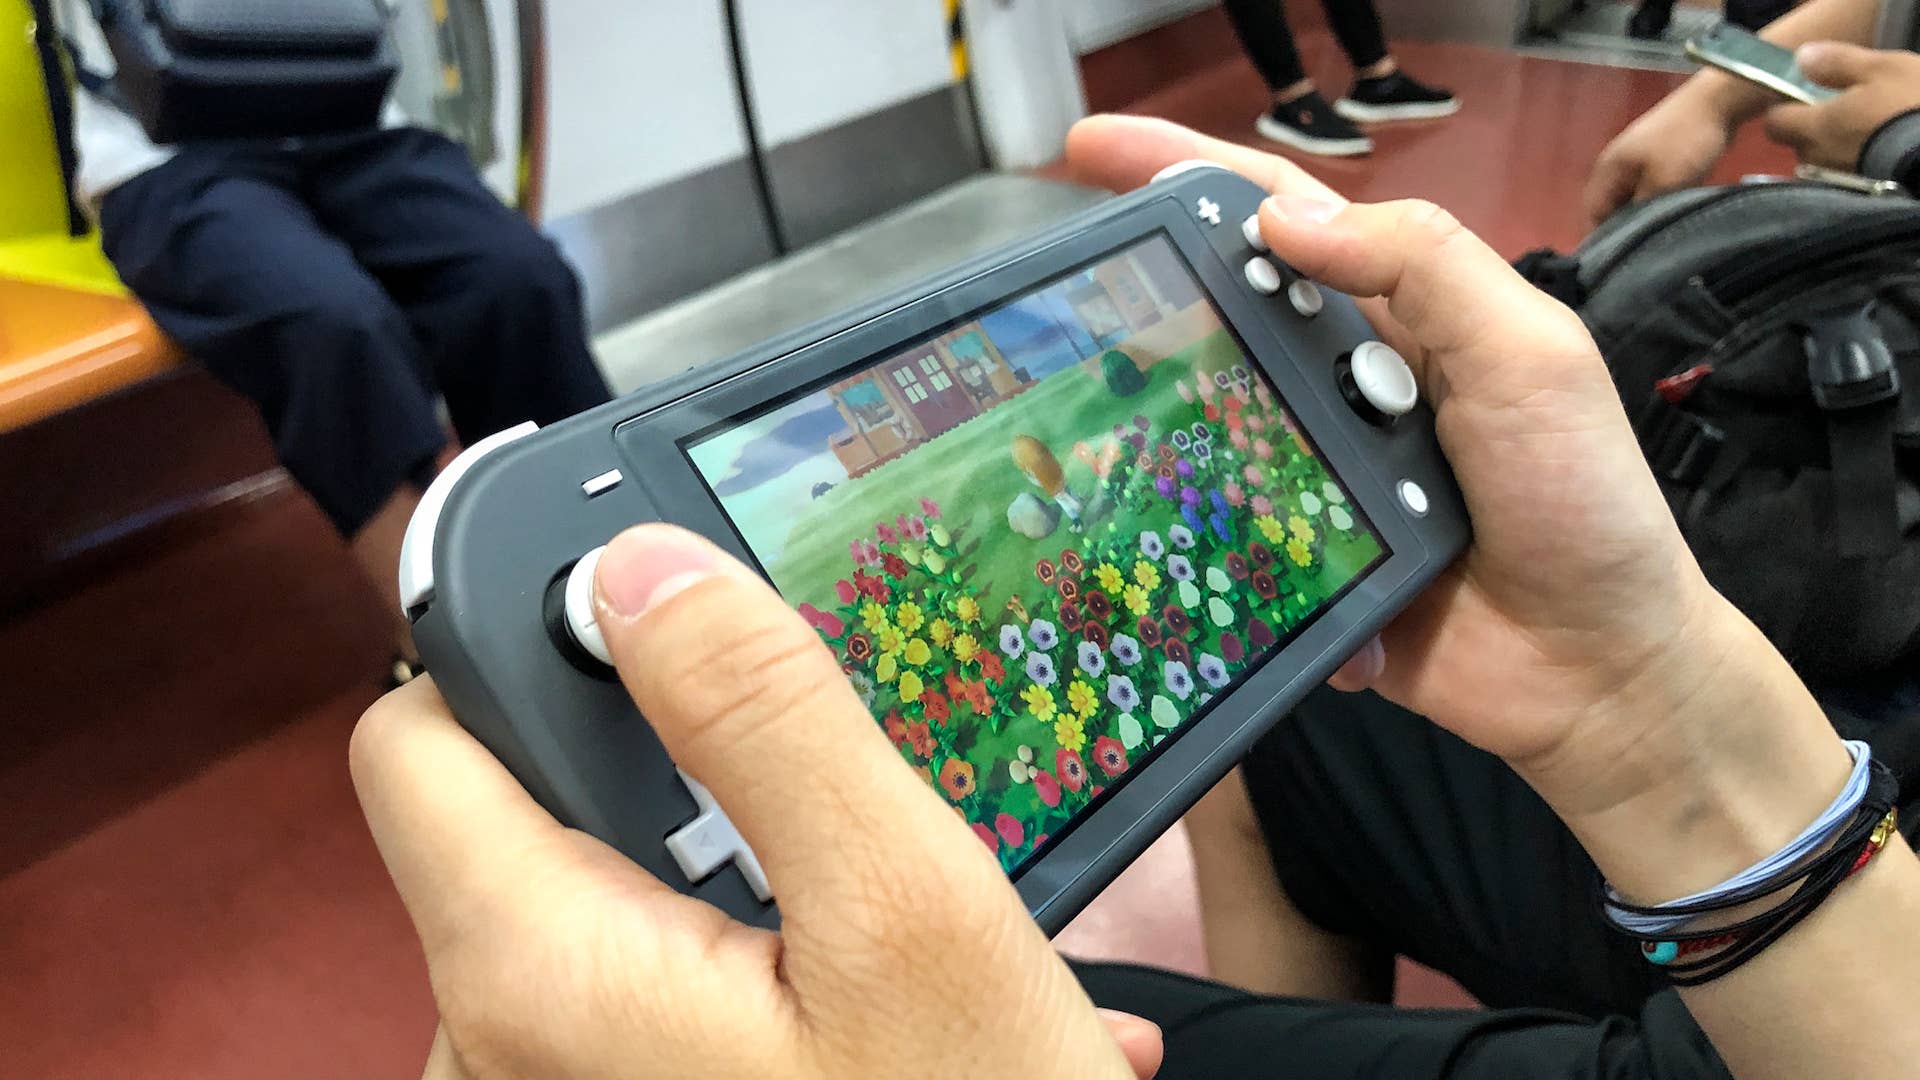 A passenger uses a Nintendo Switch